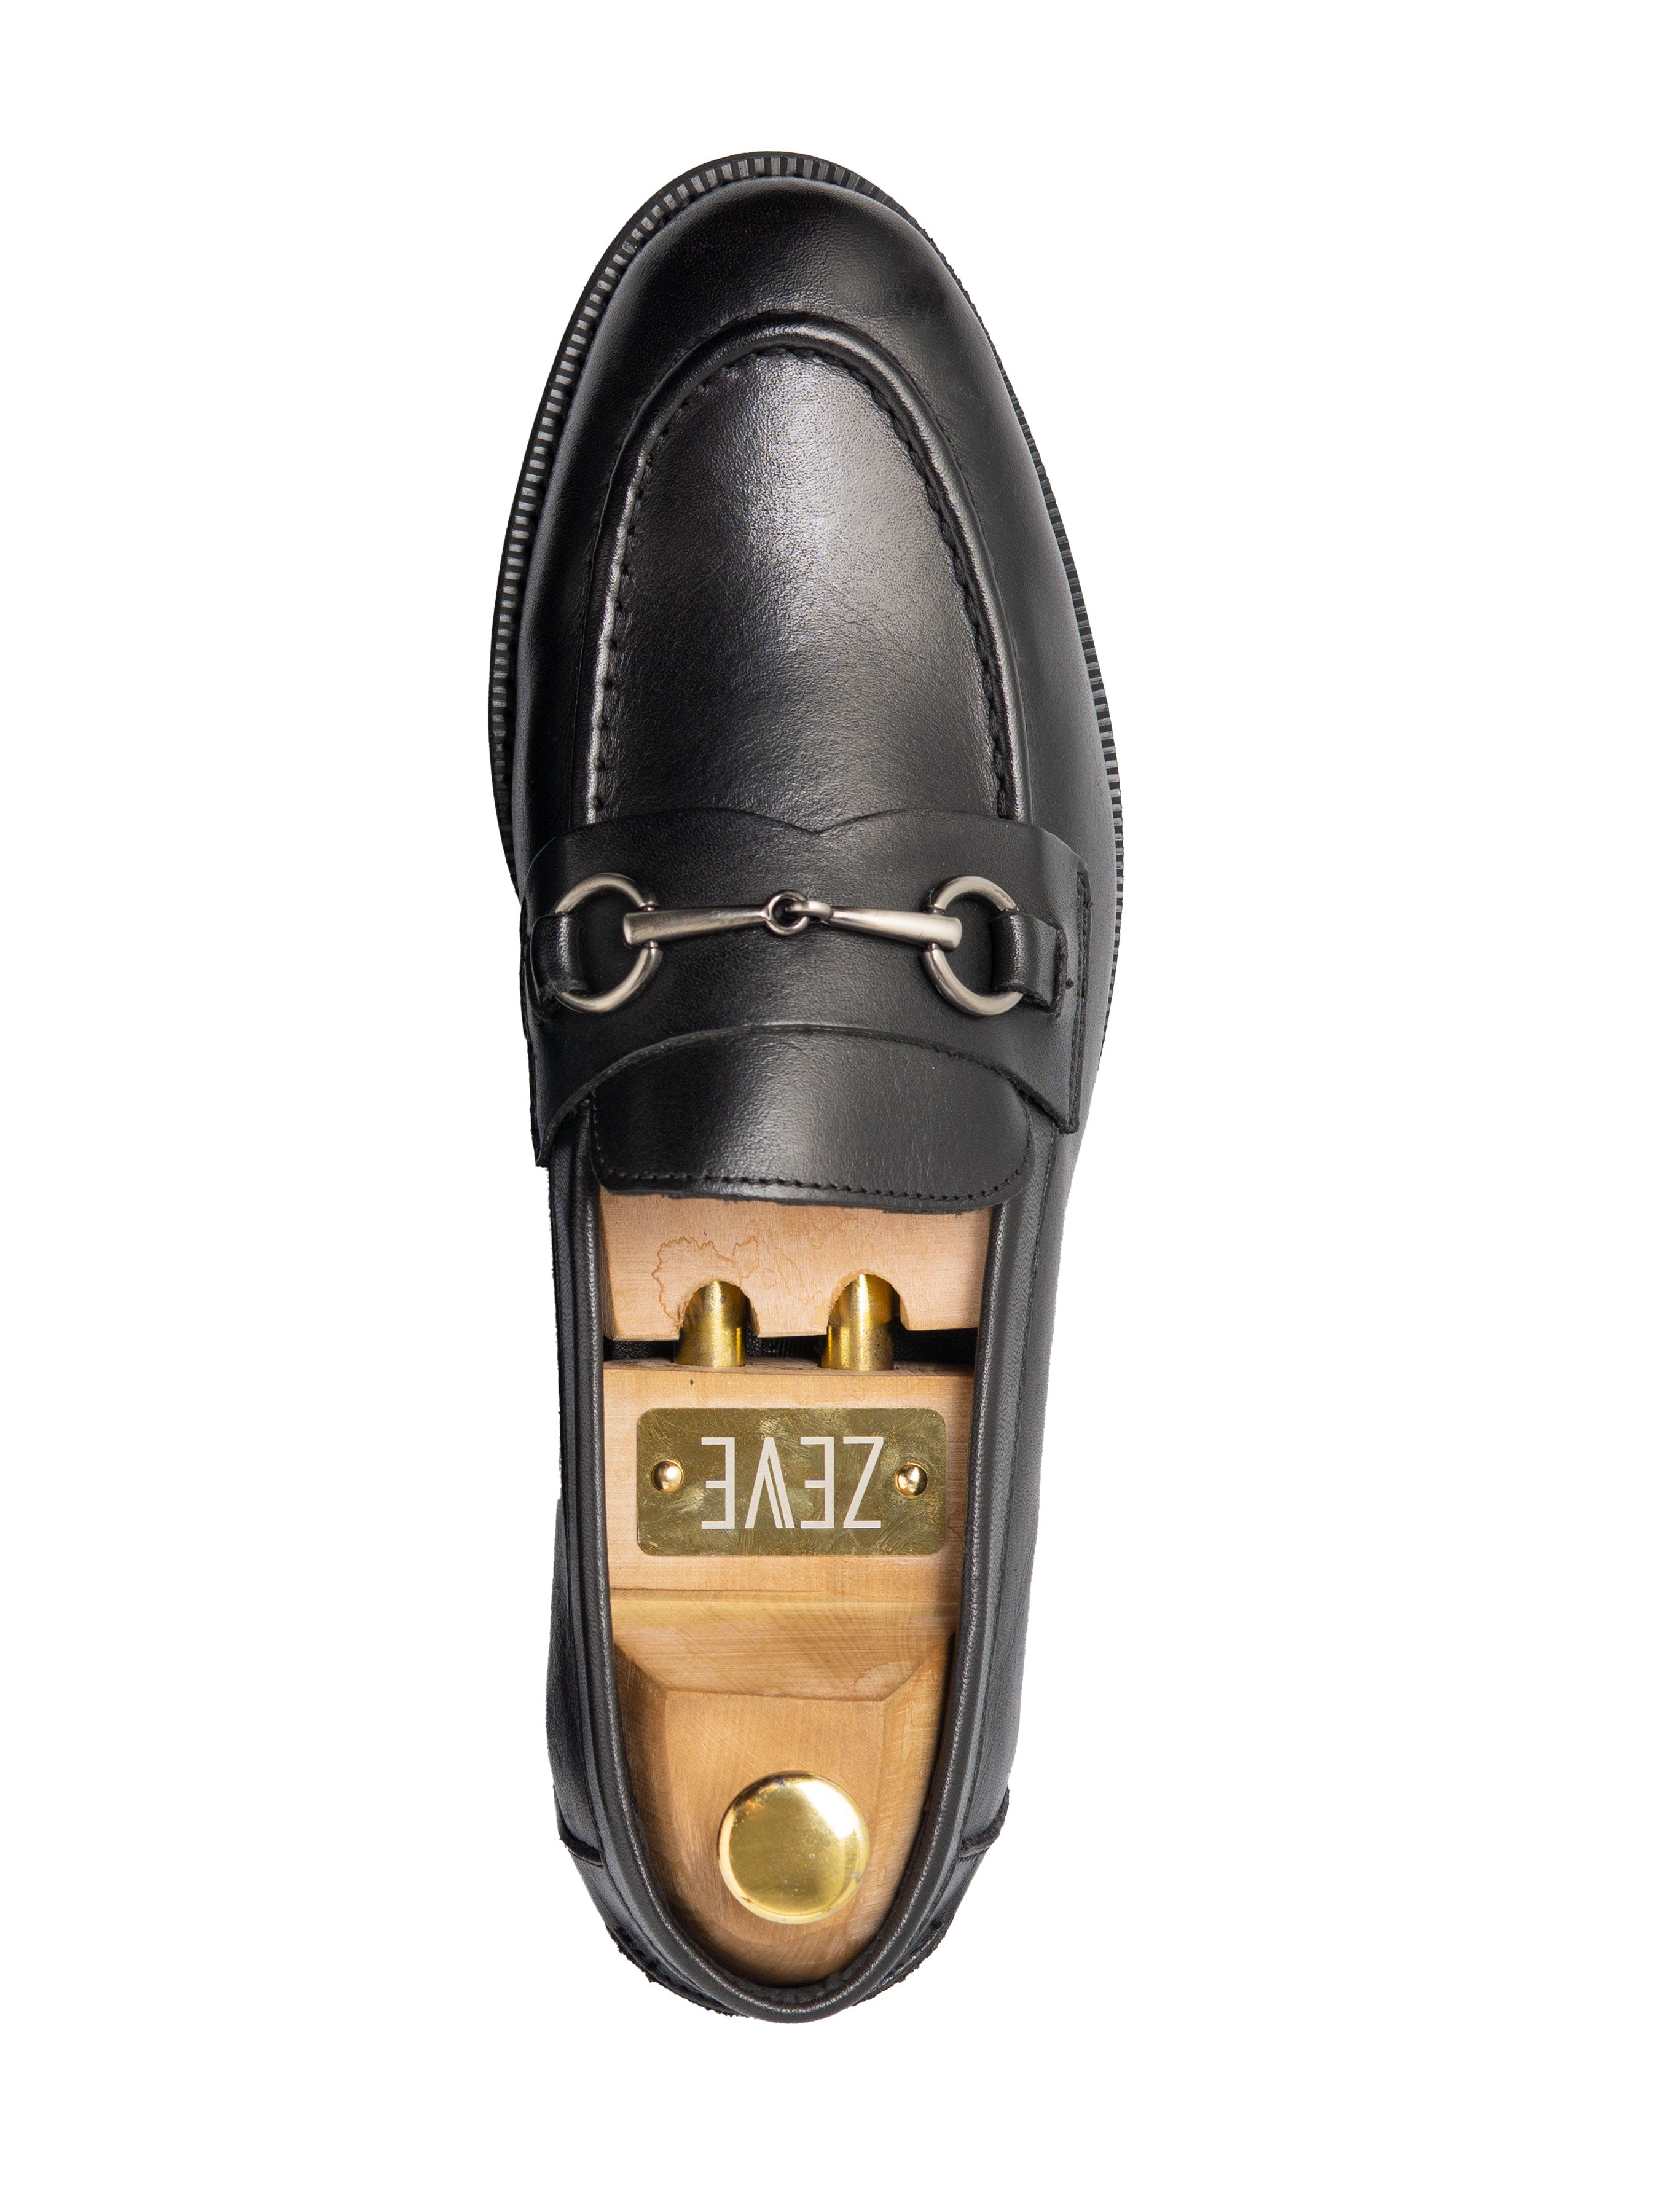 Penny Loafer Horsebit Silver Buckle - Black Leather (Crepe Sole) - Zeve Shoes